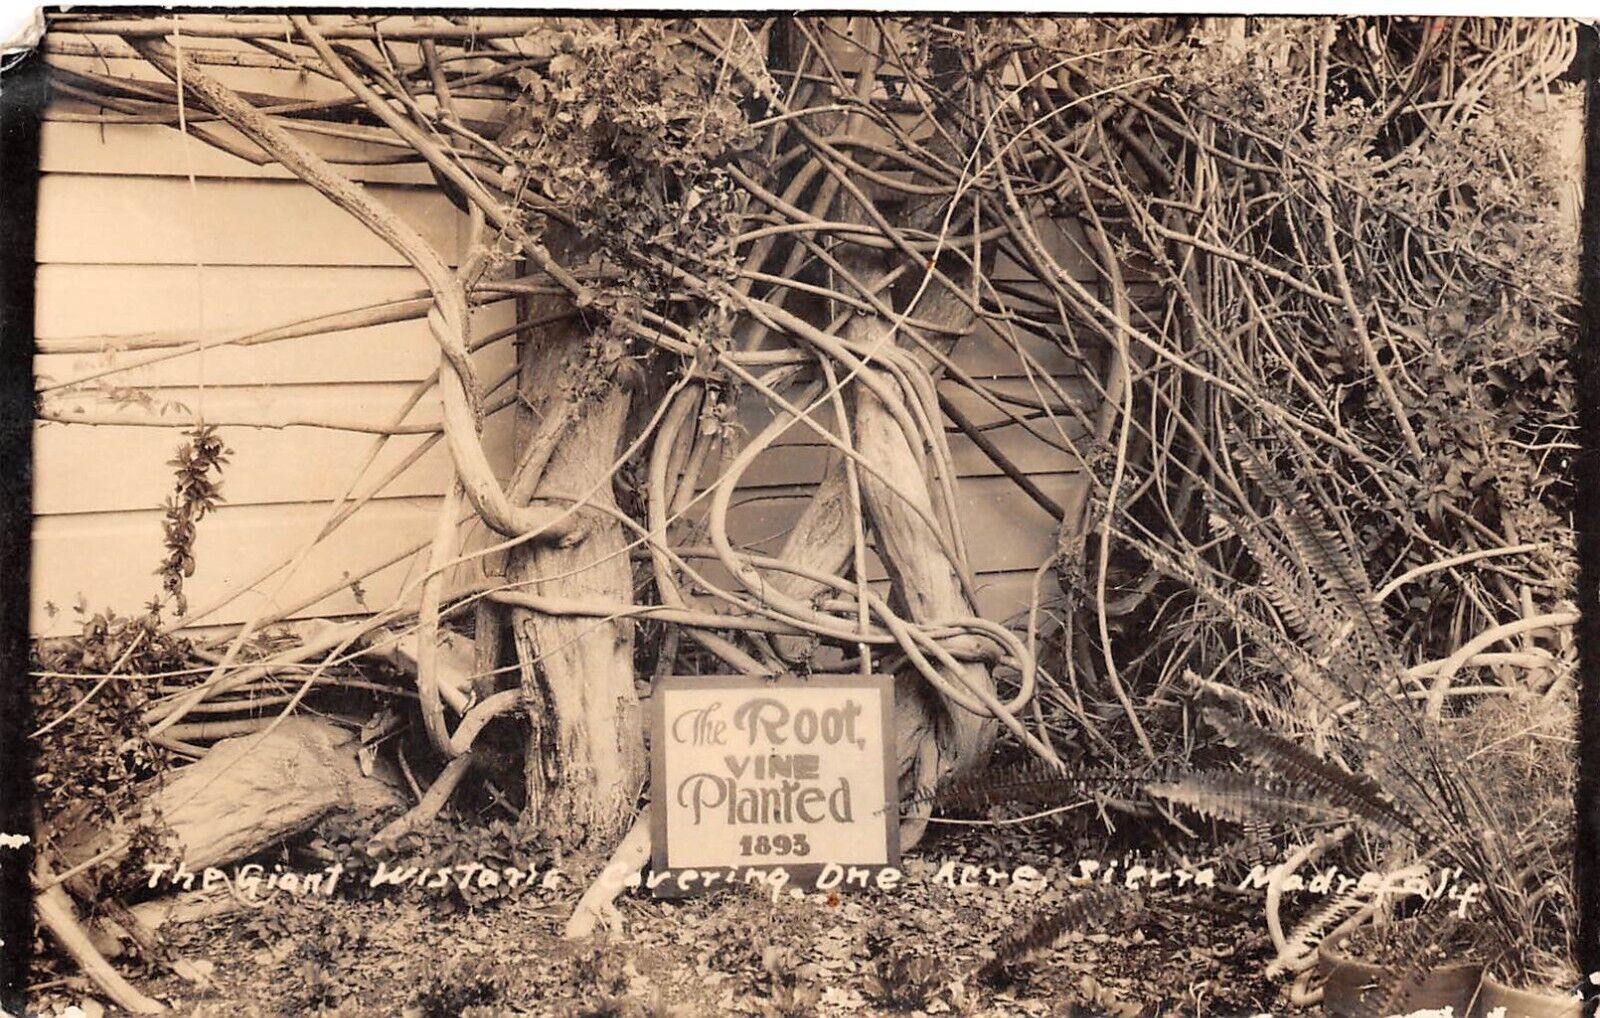 RPPC California Sierra Madre CA Giant Wisteria Planted 1893 Photo Postcard 9289